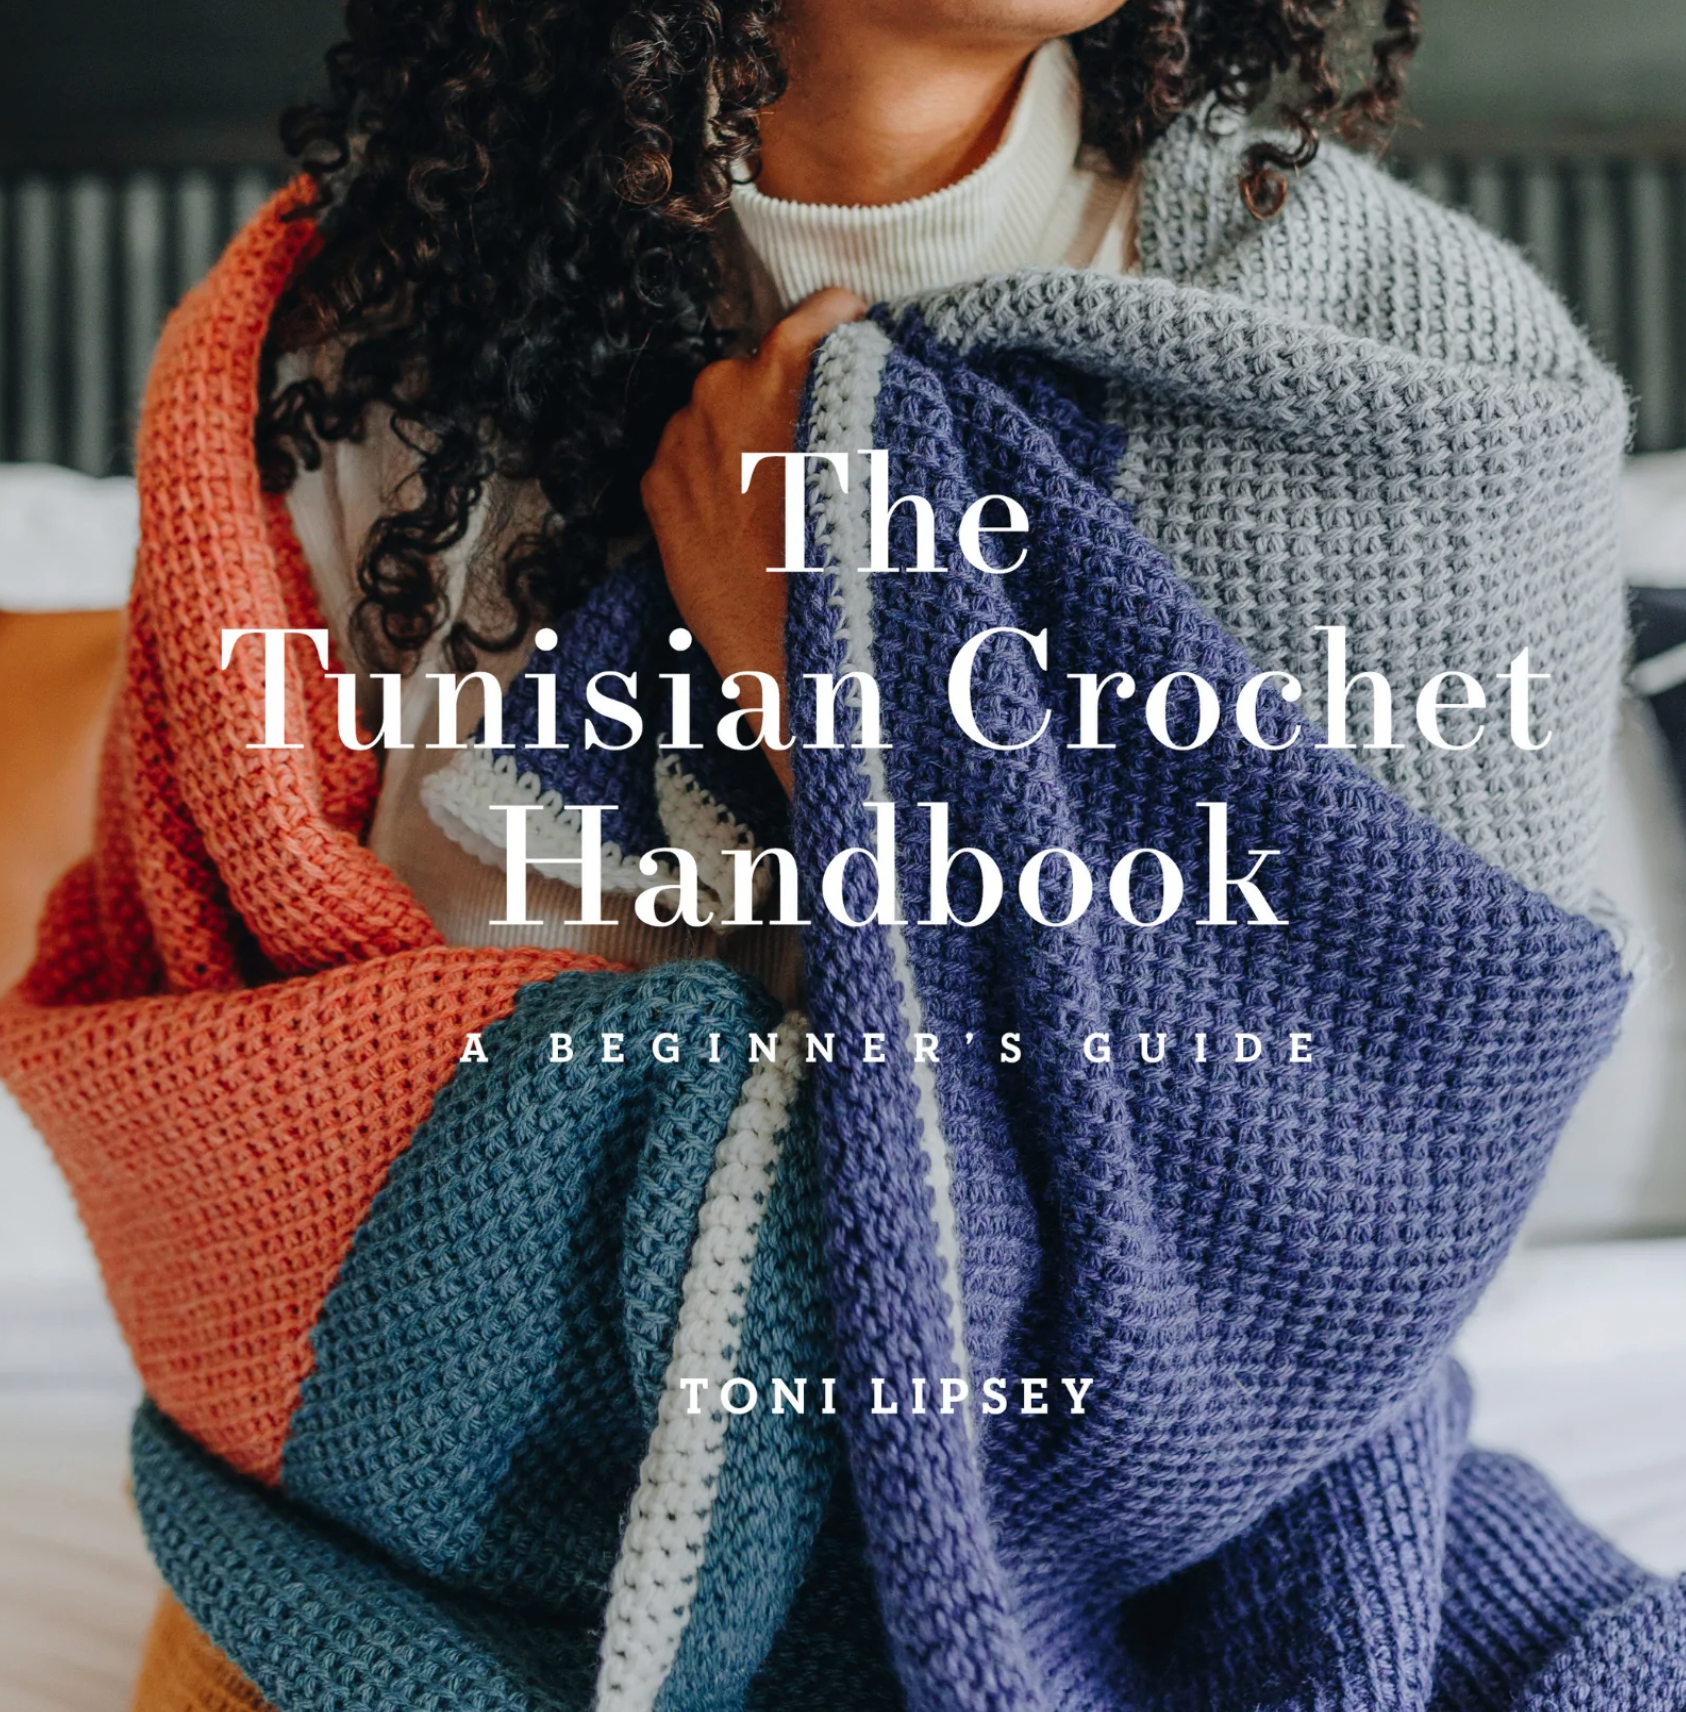 Crochet Book Cover: 15 Wonderful Crochet Pattern To Cover Your Books:  (Crochet Hook A, Crochet Accessories, Crochet Patterns, Crochet Books, Easy